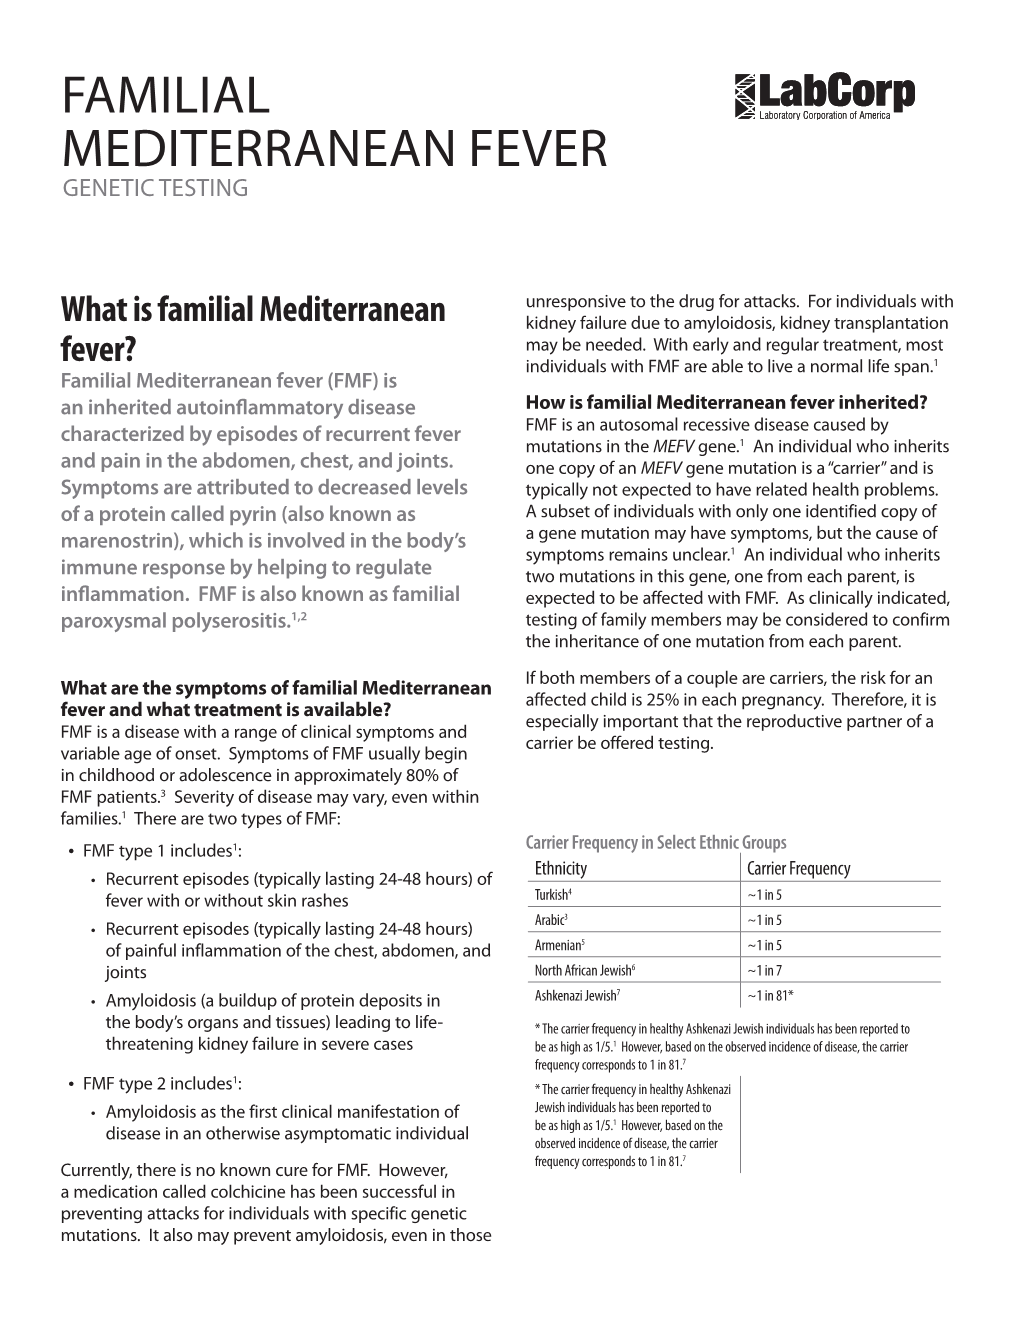 Familial Mediterranean Fever Genetic Testing